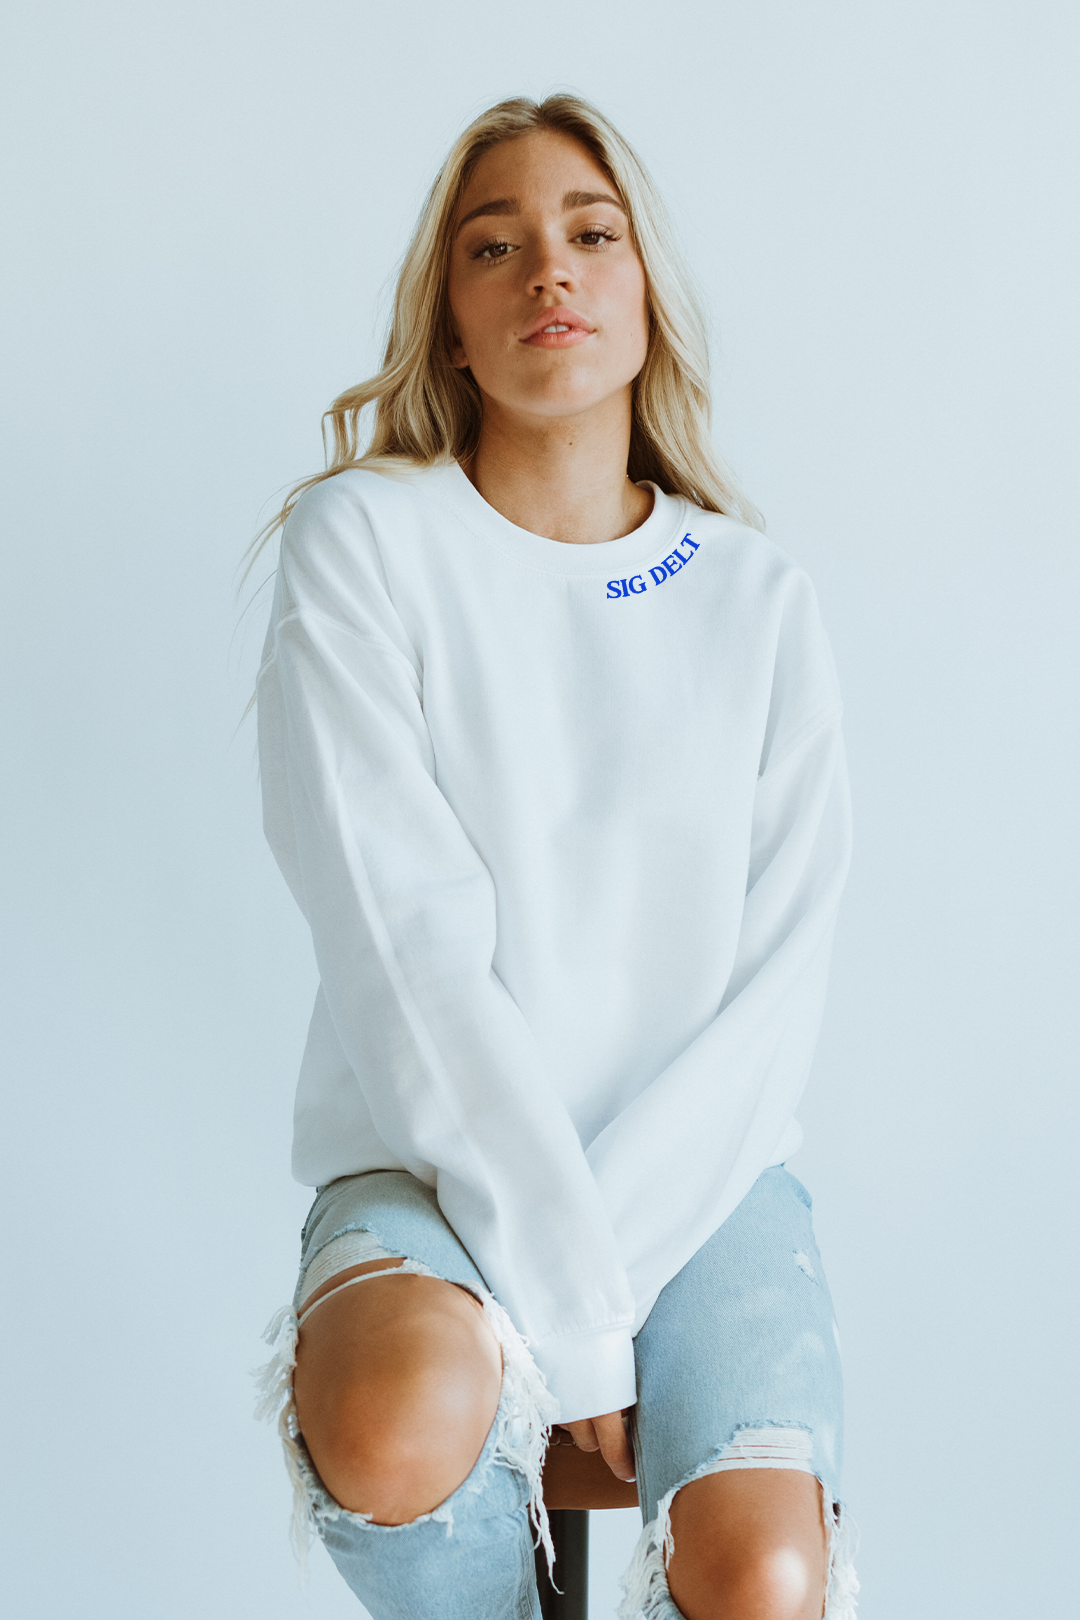 White sweatshirt with Blue Collar text - Sig Delt